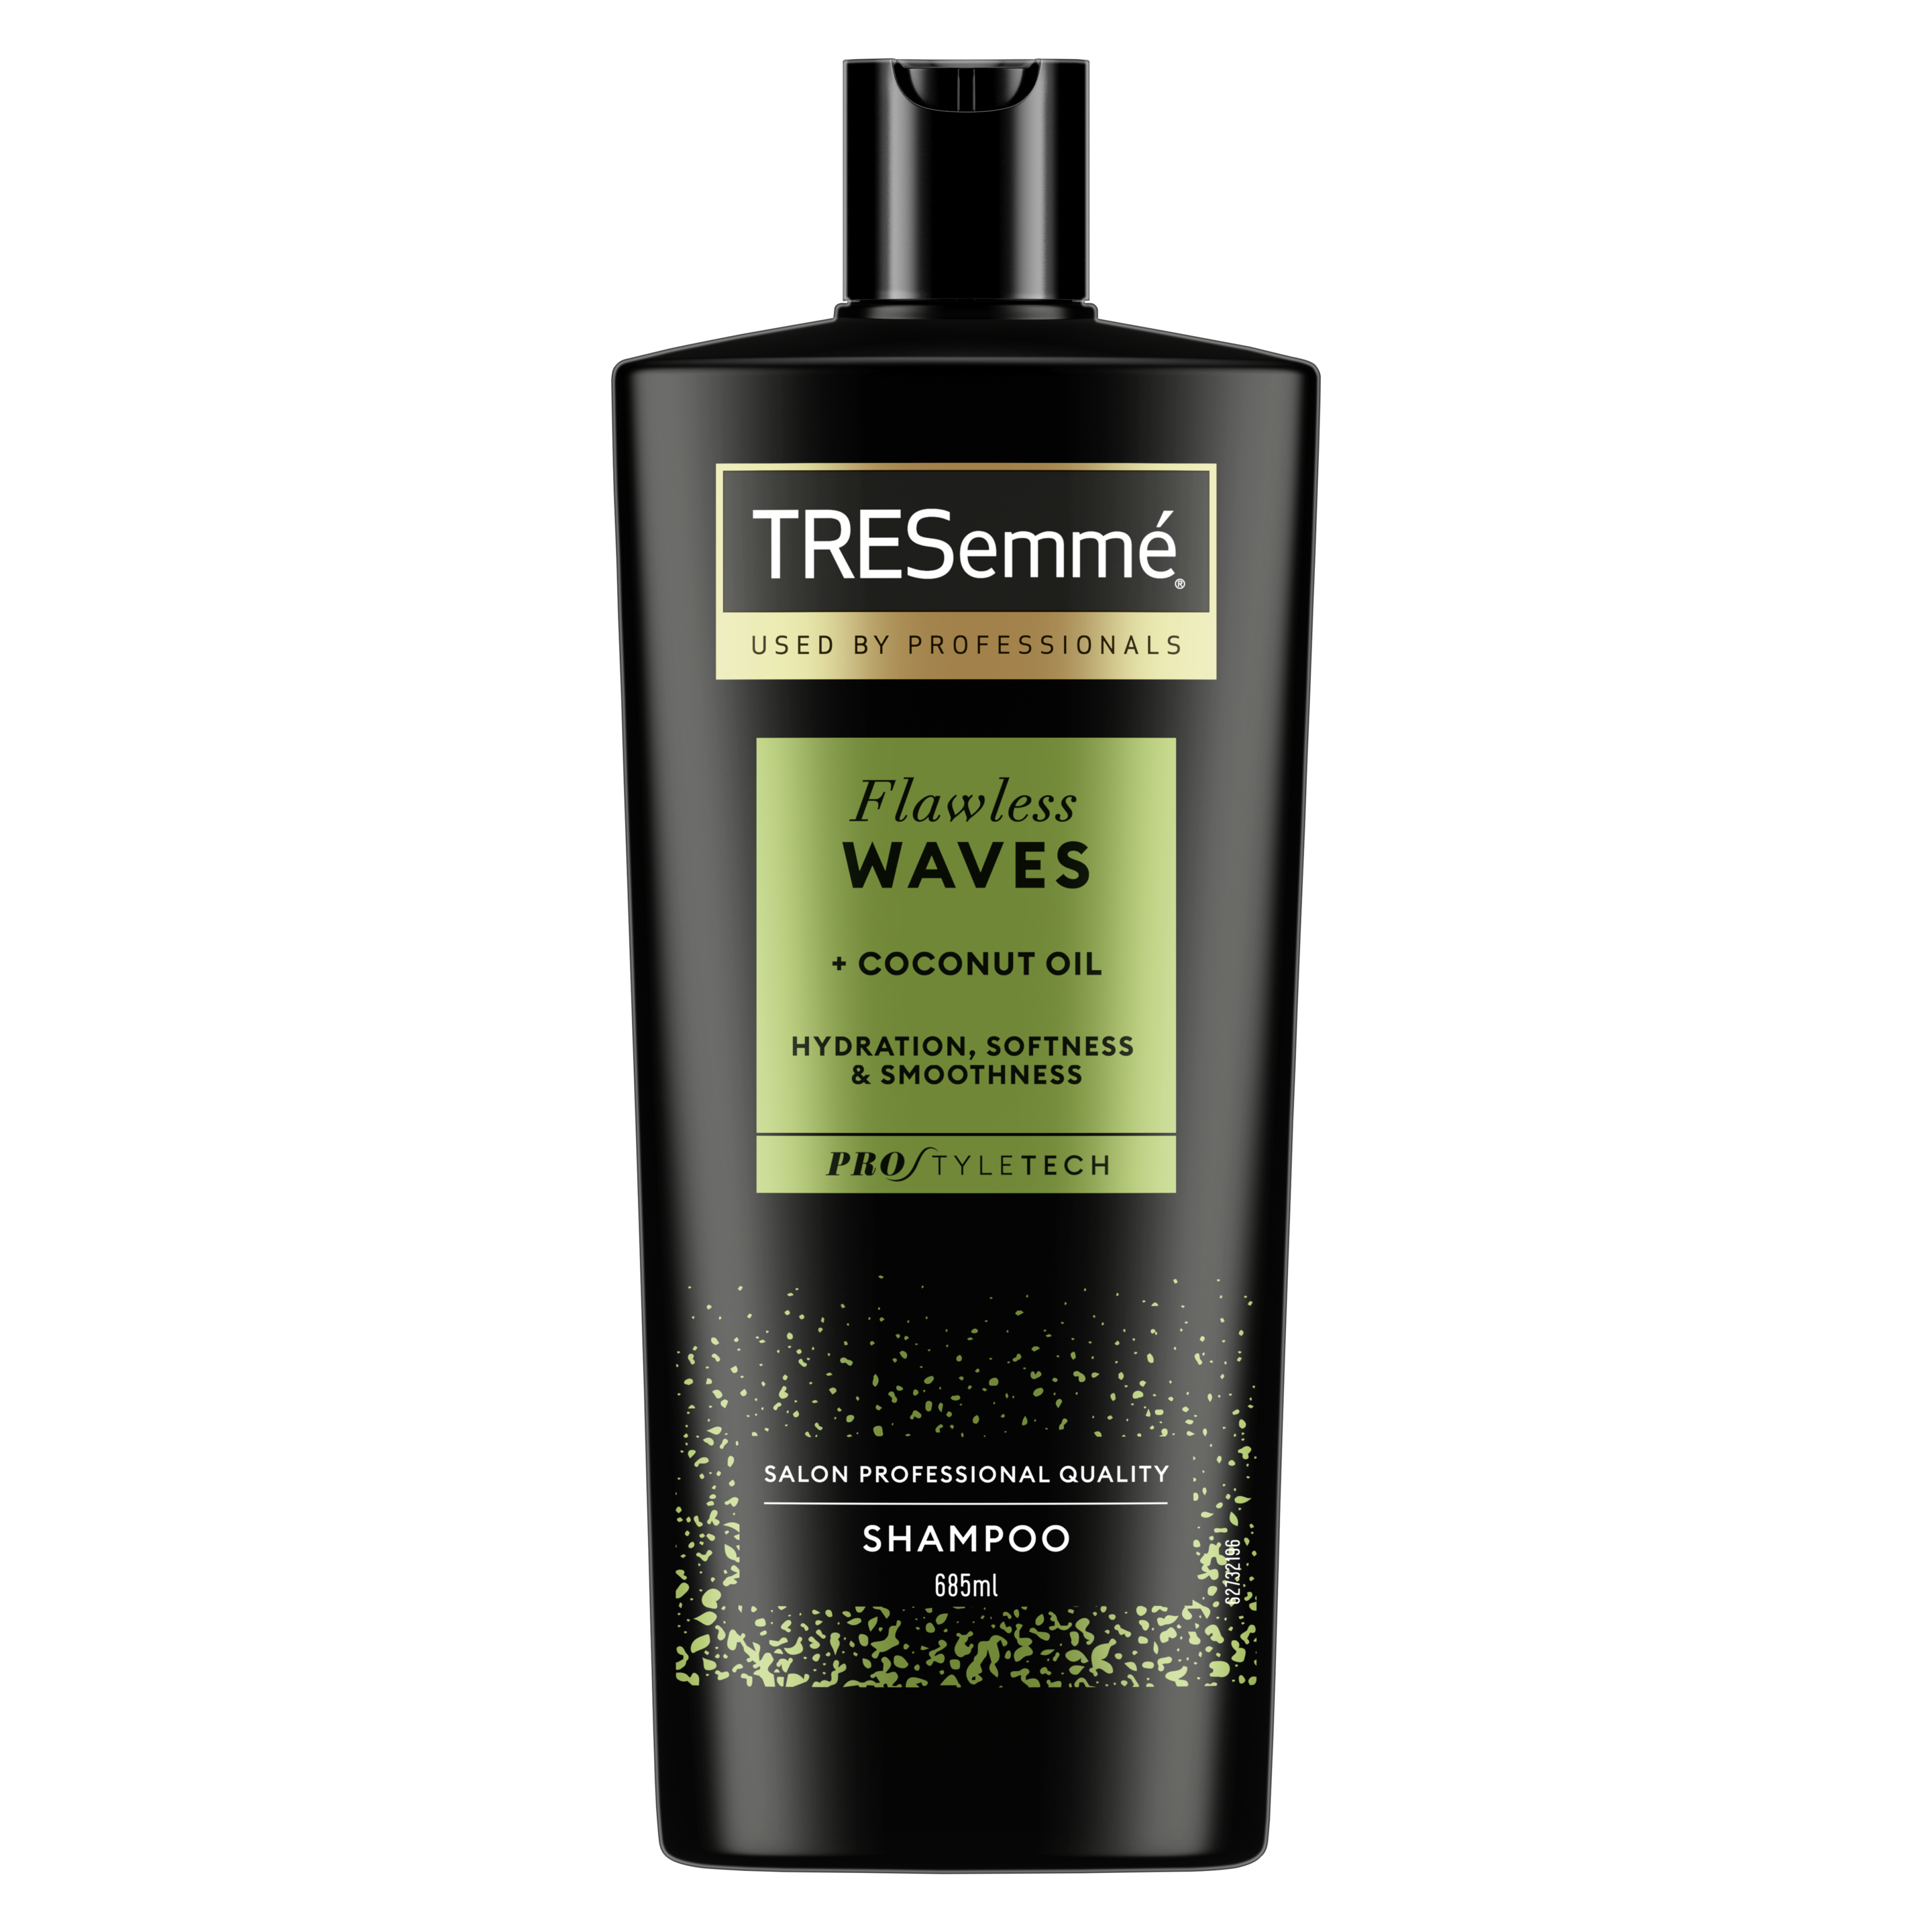 Flawless waves -shampoo 685ml